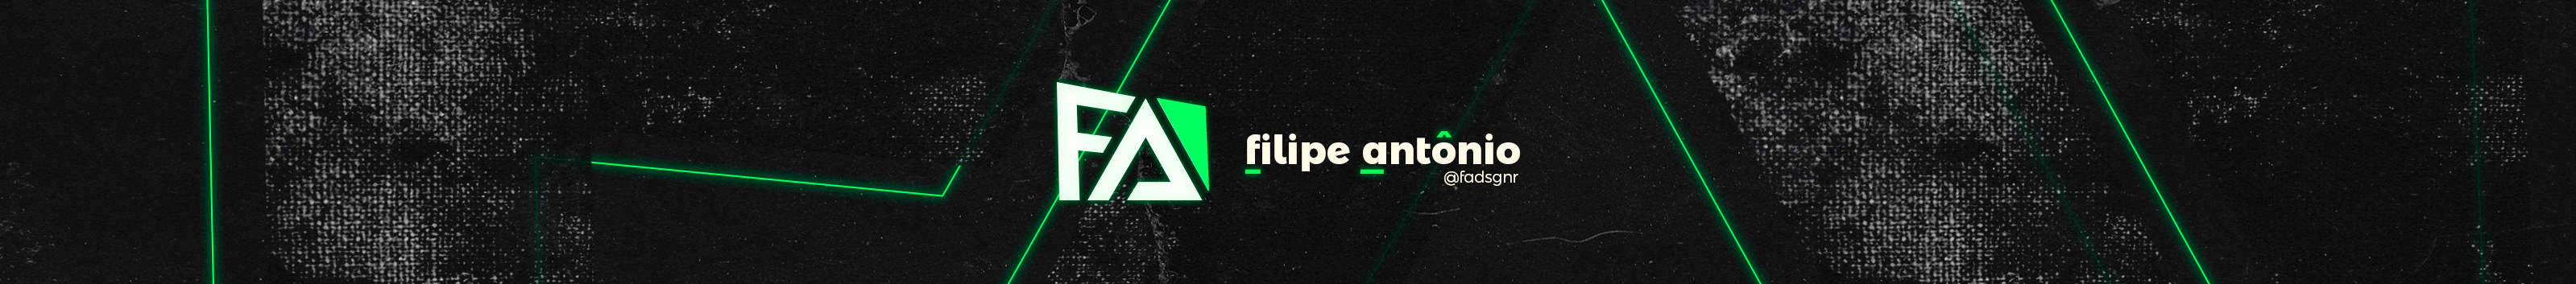 Filipe Antônio's profile banner